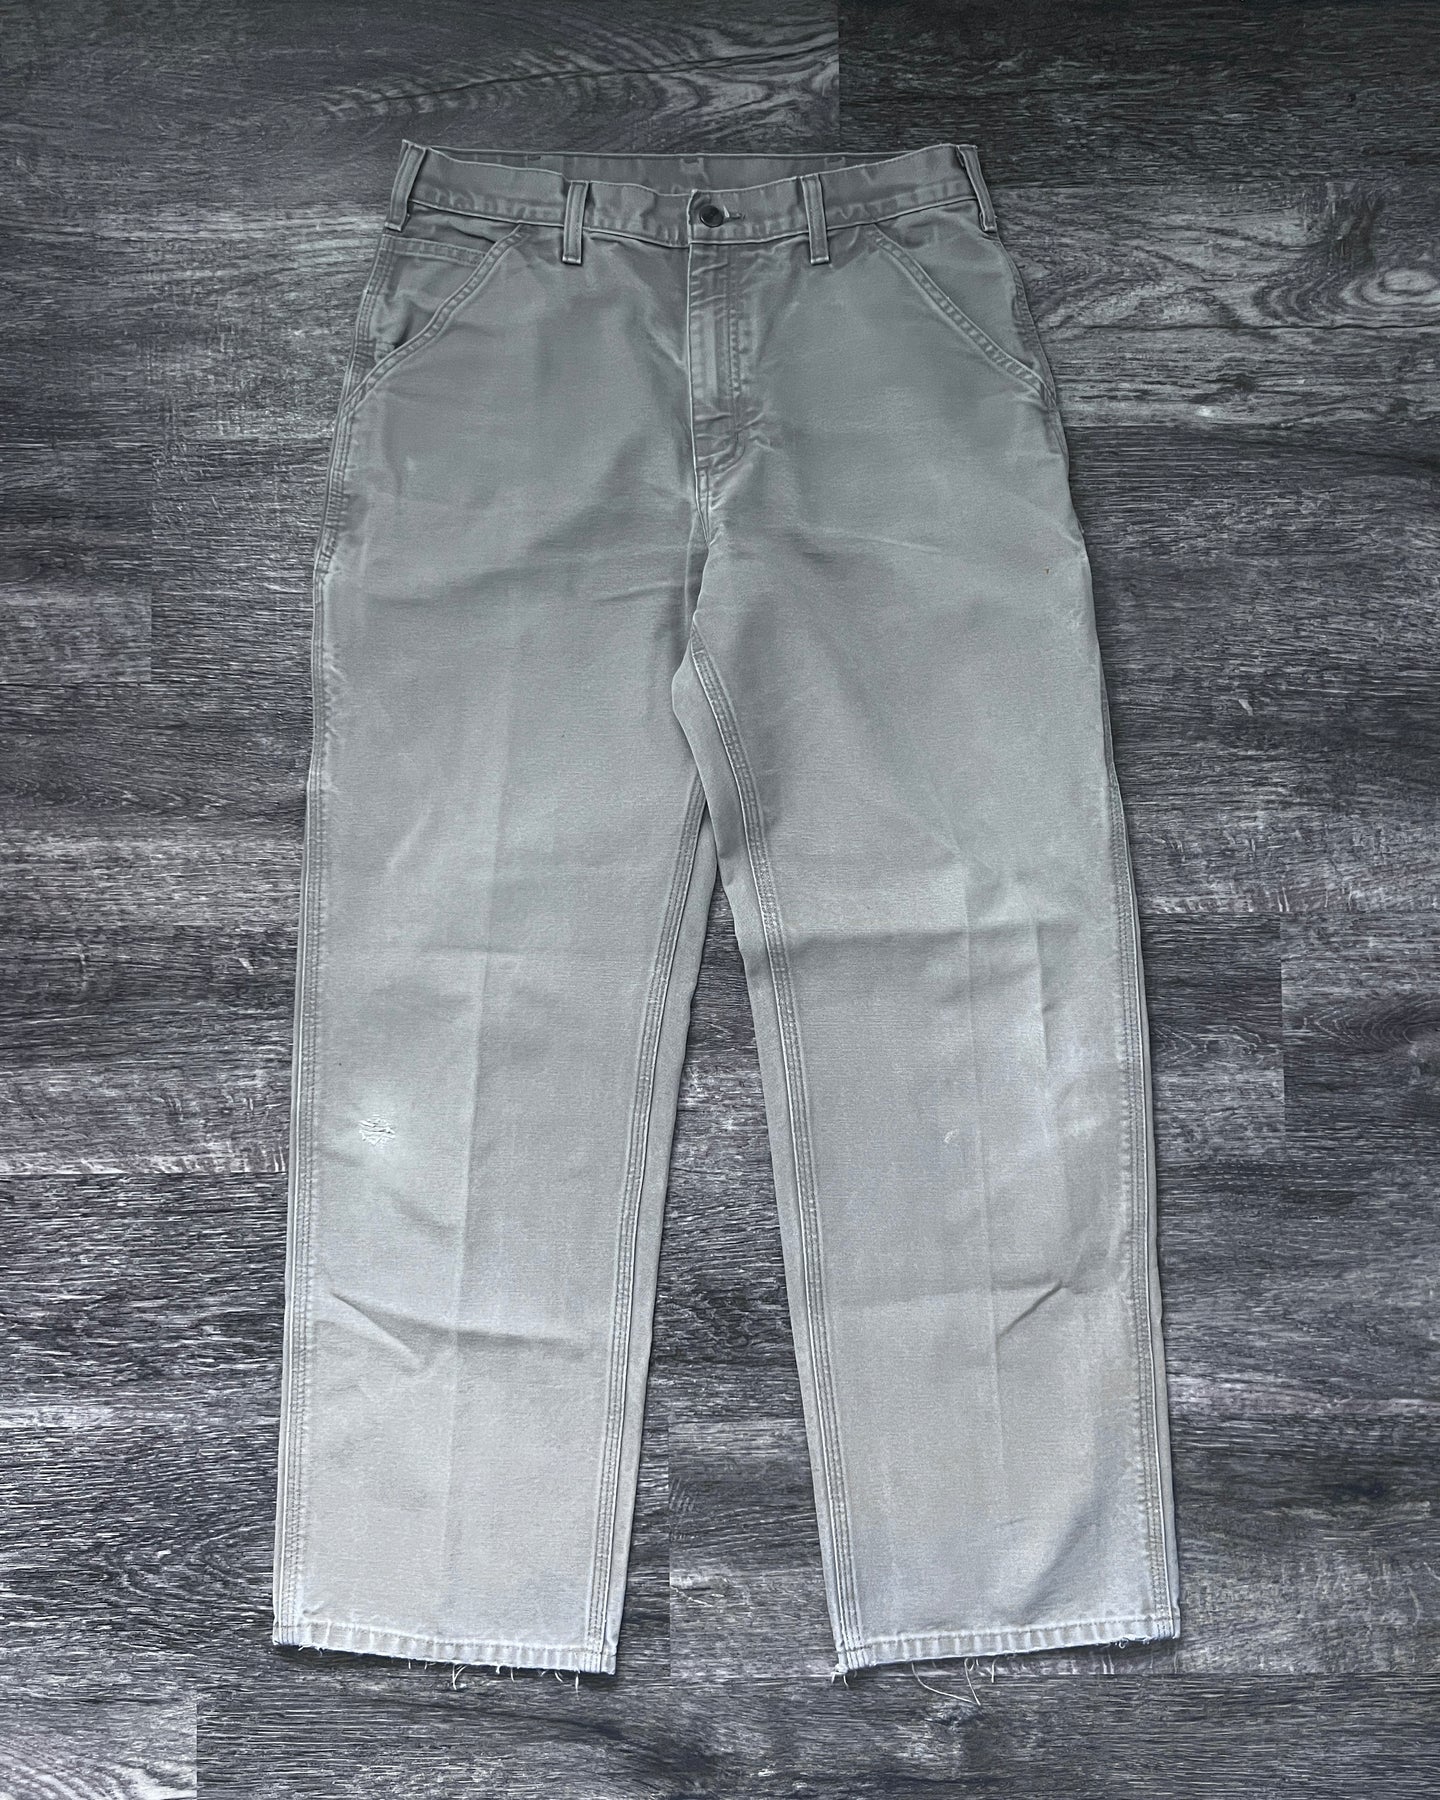 Carhartt Stone Grey Carpenter Pants - Size 34 x 31